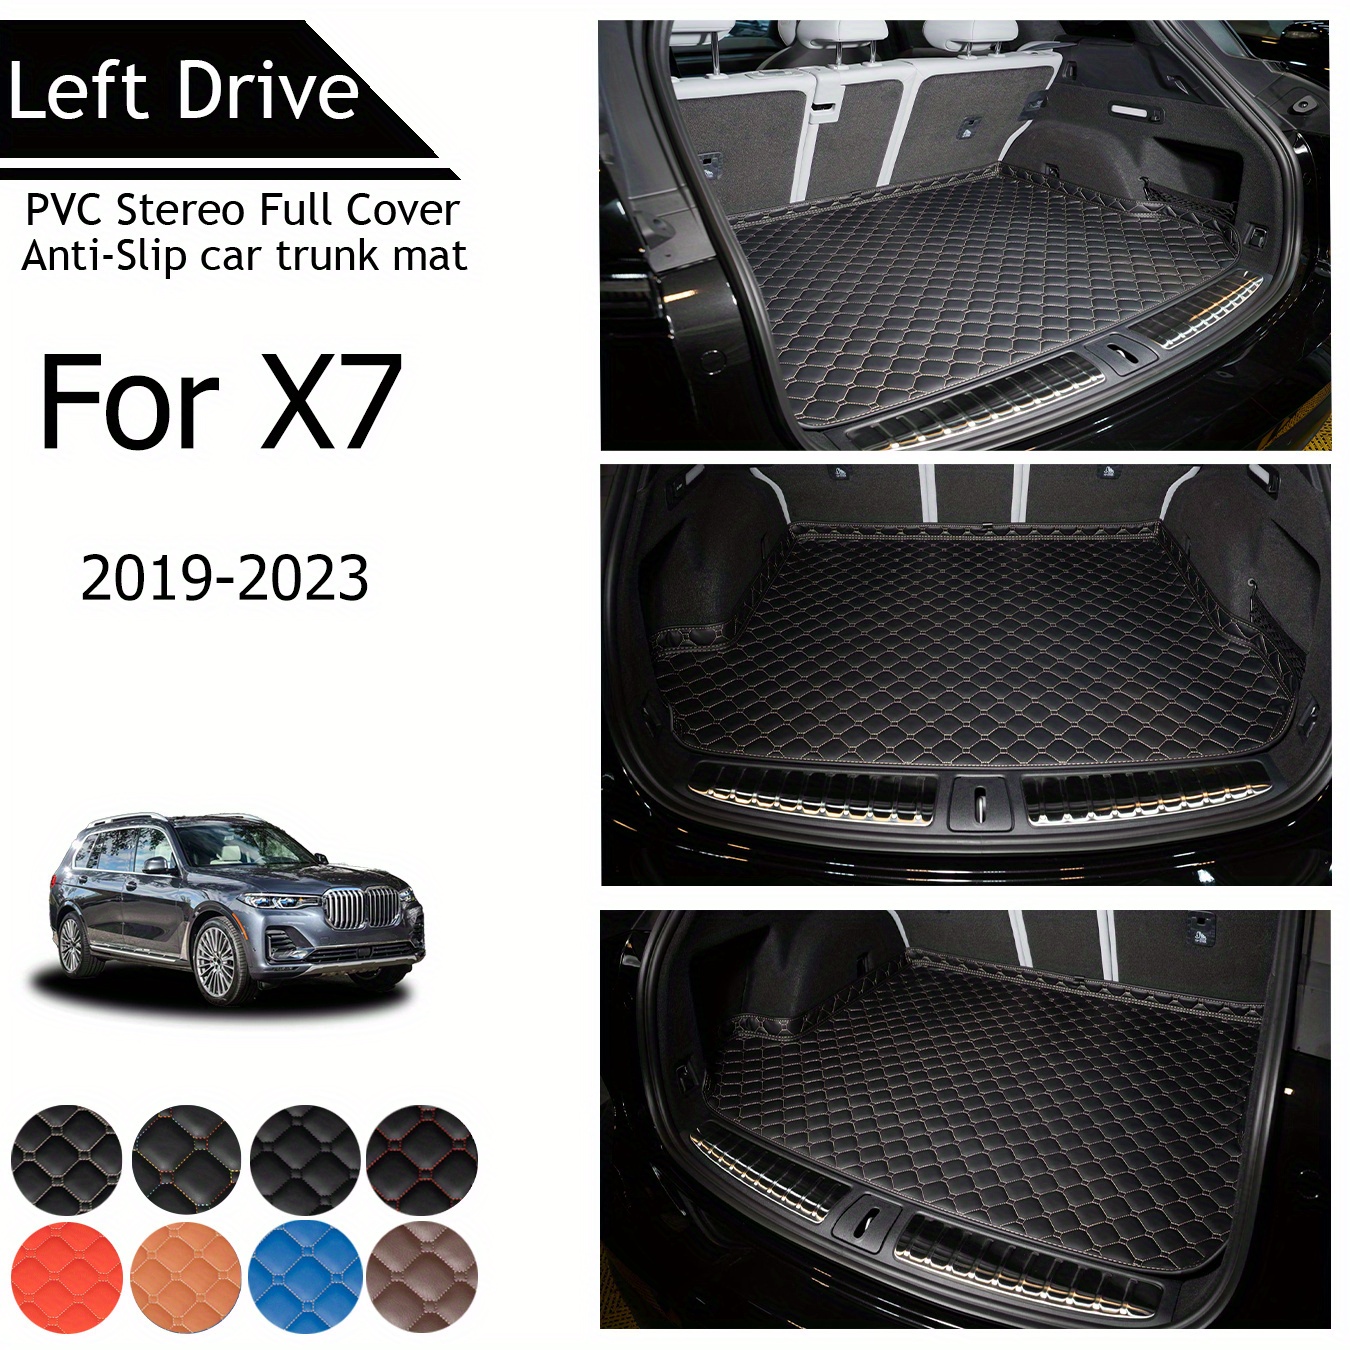 

Tegart [lhd] For X7 For 2019-2023 3 Layers Pvc Stereo Full Cover Anti-slip Car Trunk Mat